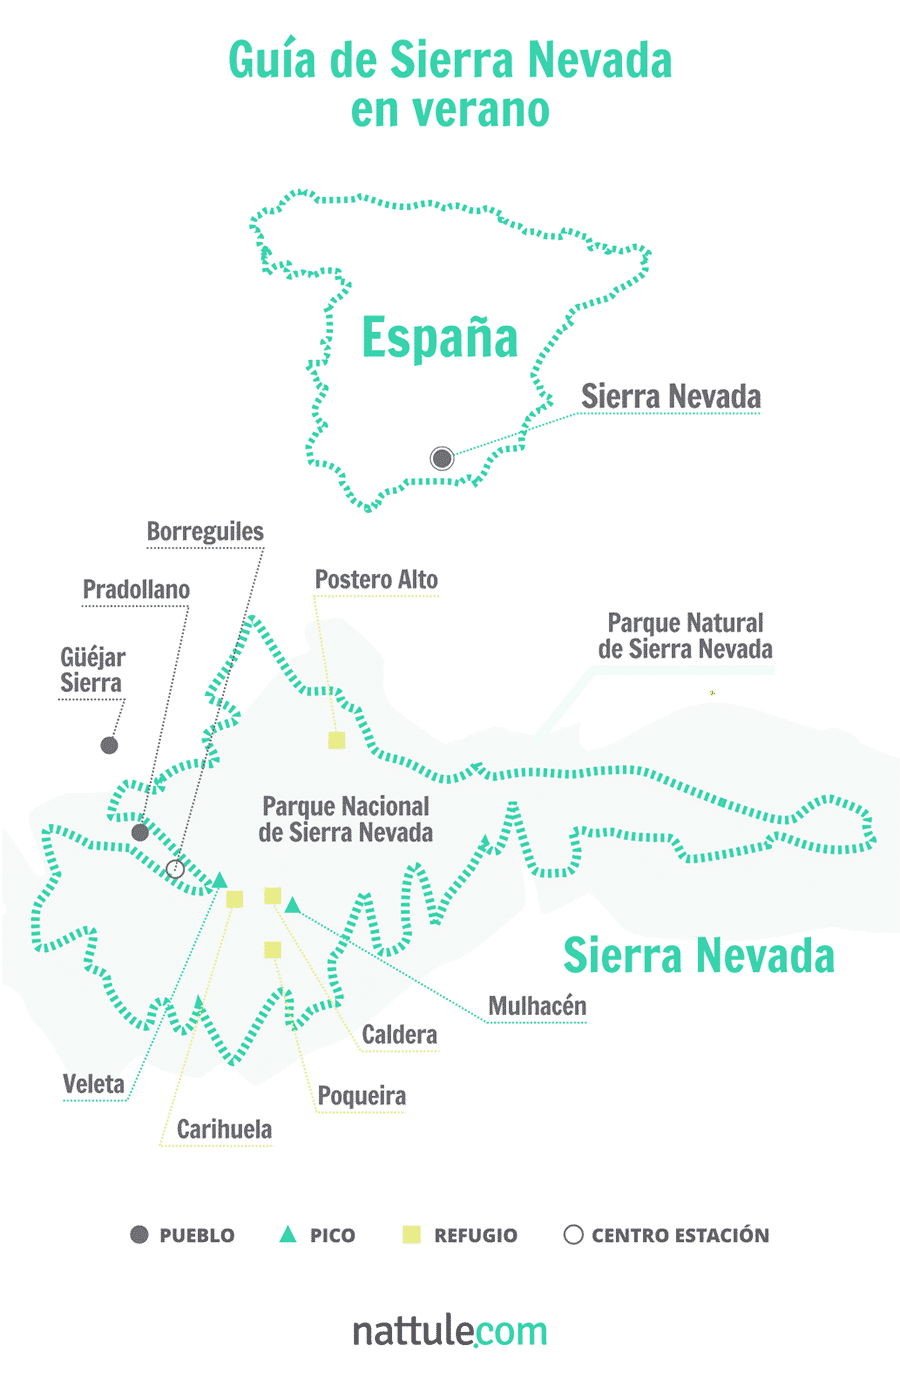 Sierra Nevada summer activities